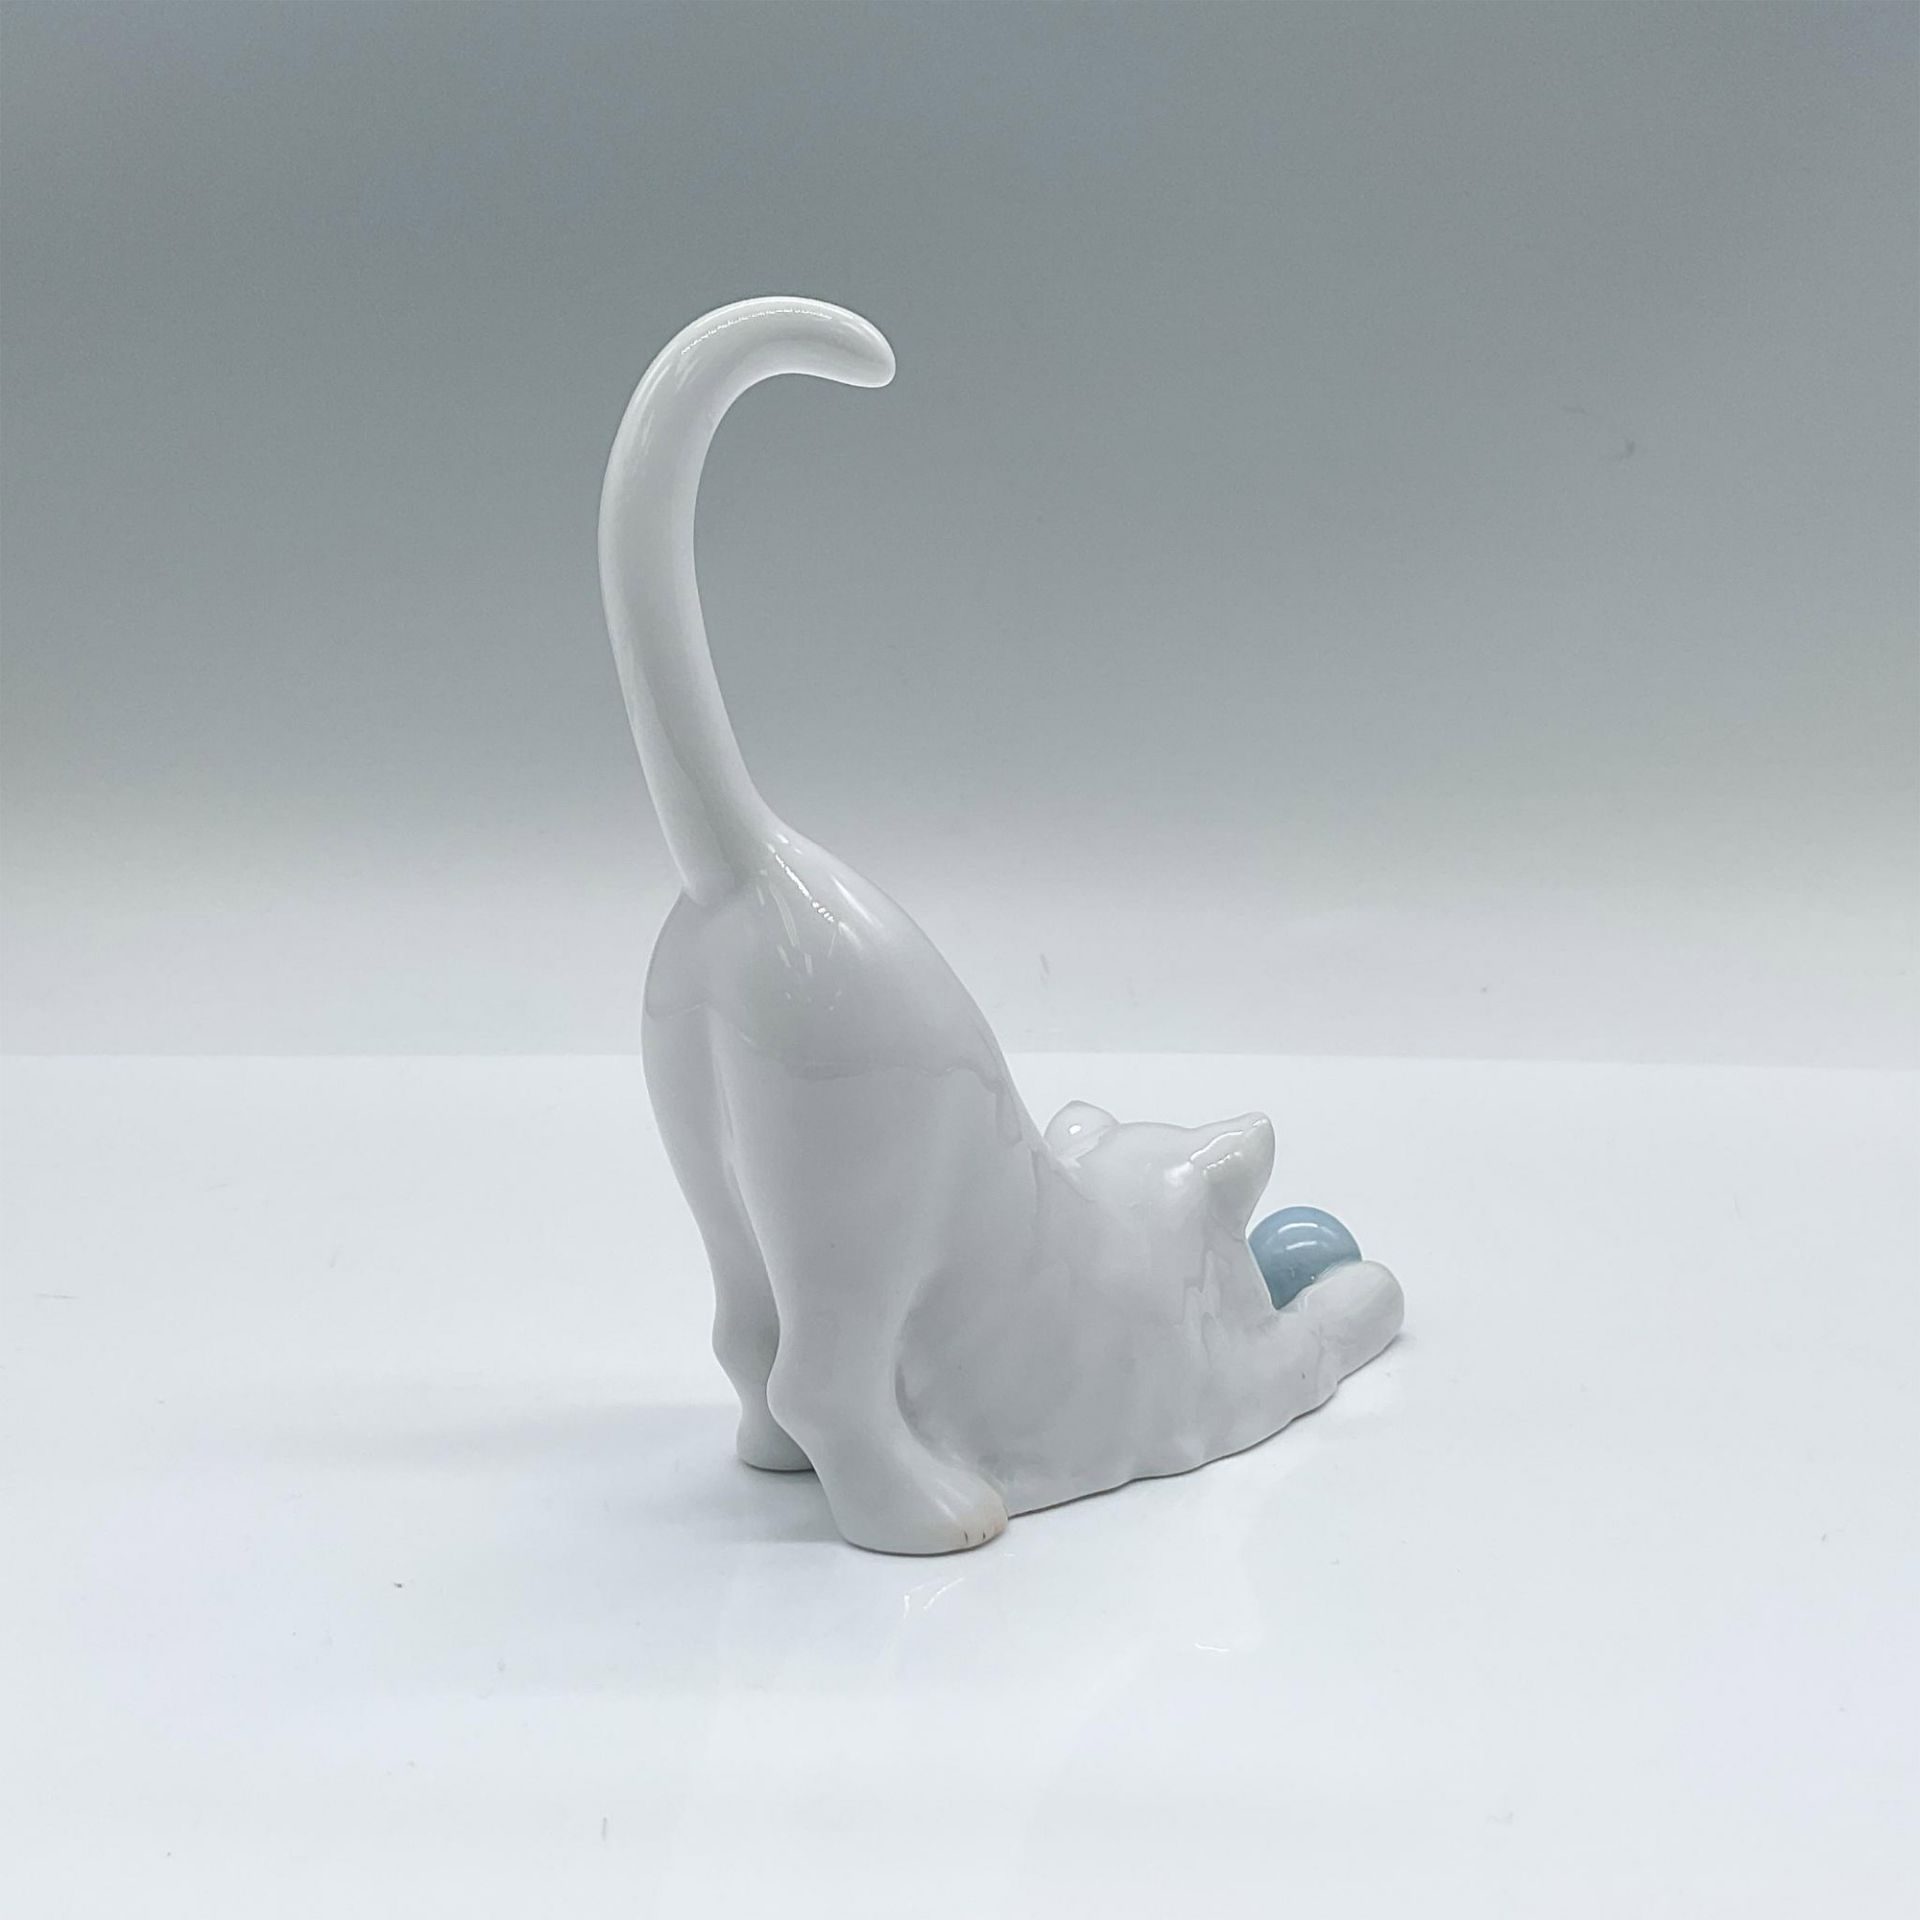 Herend Porcelain Cat Figurine - Image 2 of 3